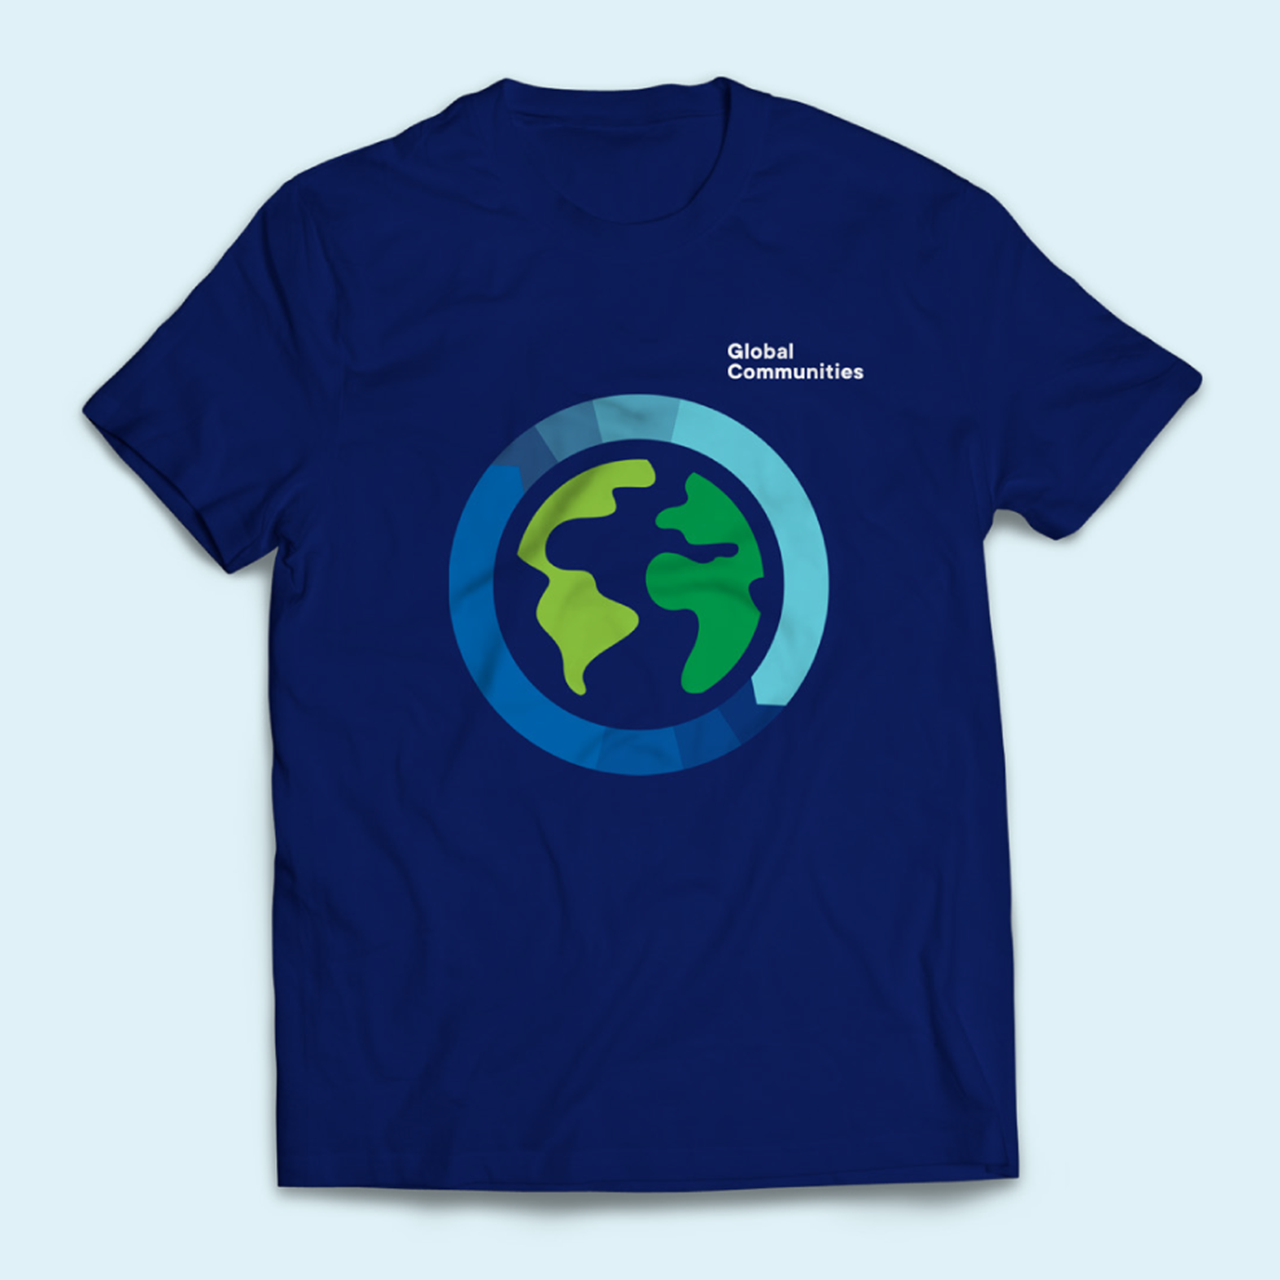 A blue t shirt with Global Communities logo